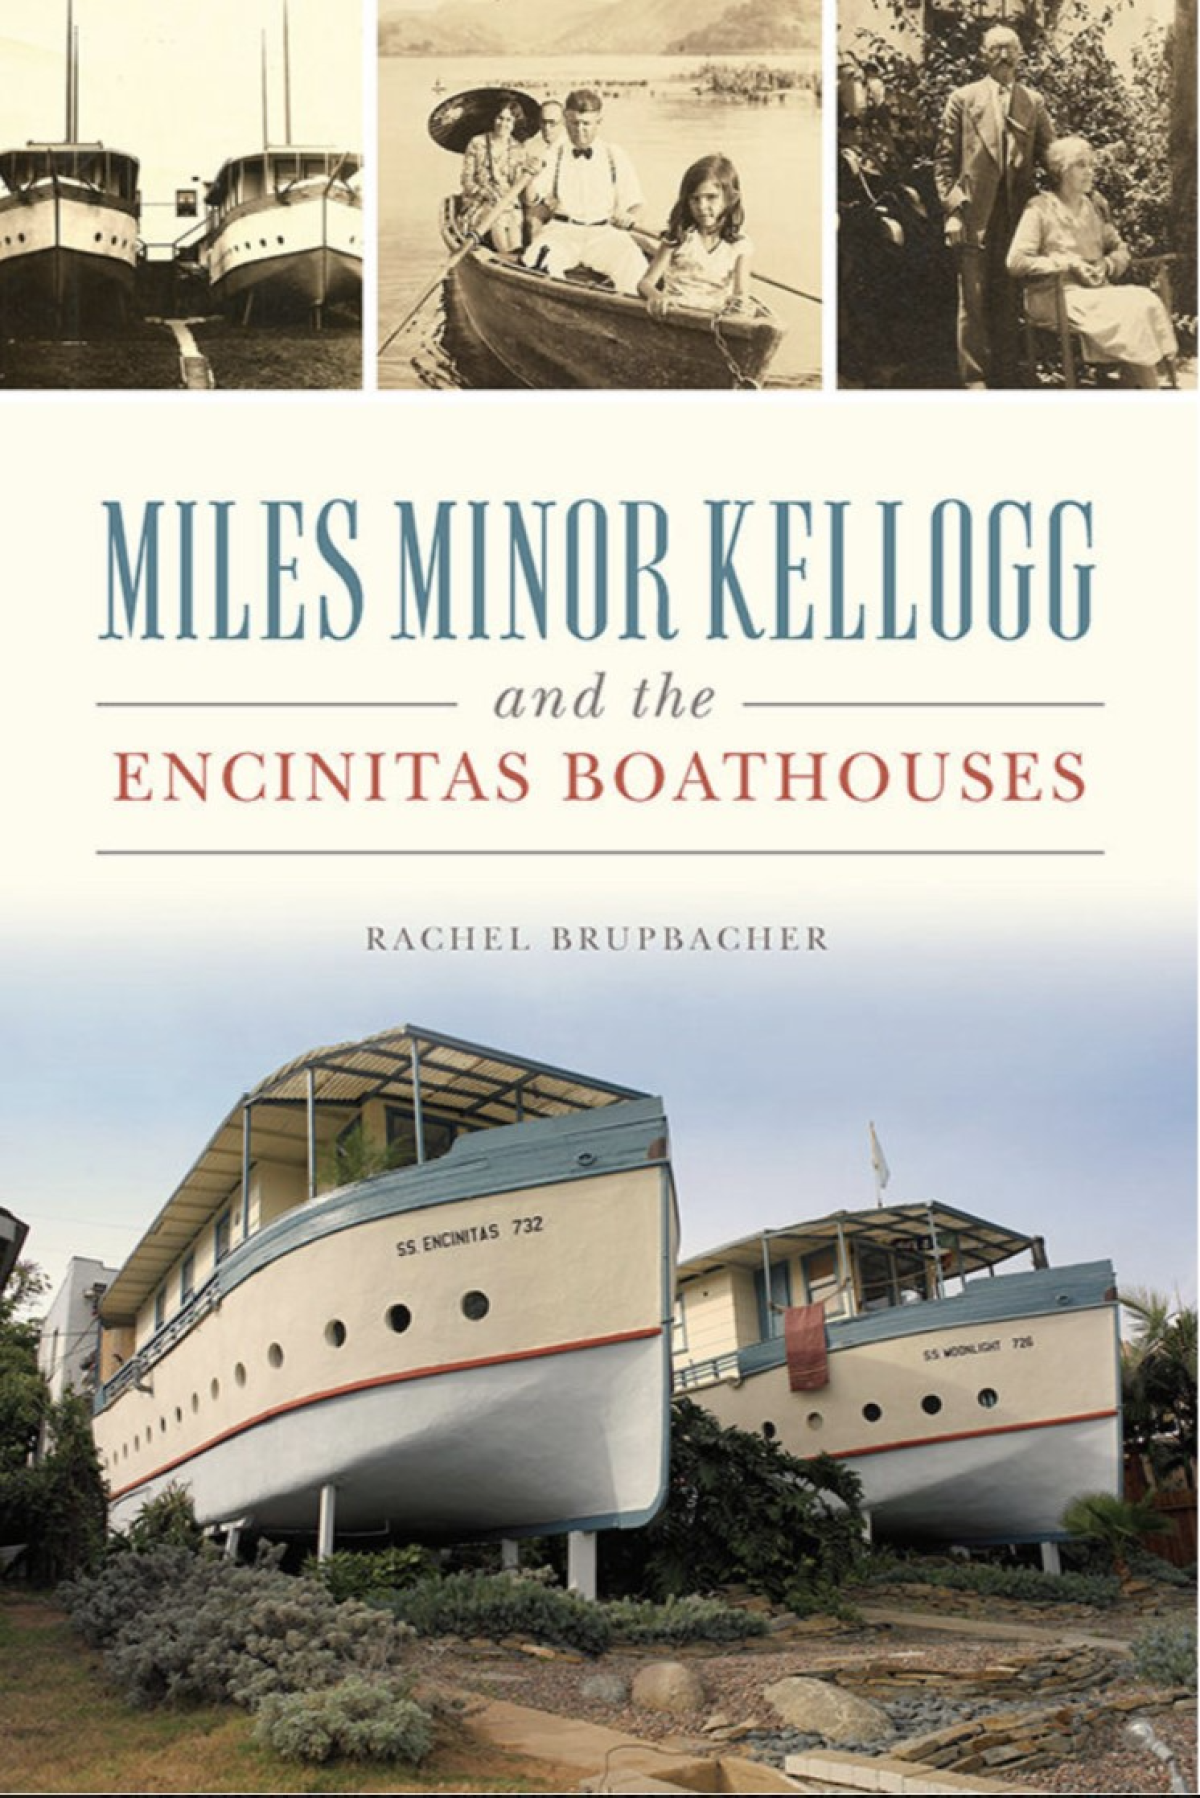 Cover of “Miles Minor Kellogg and the Encinitas Boathouses"